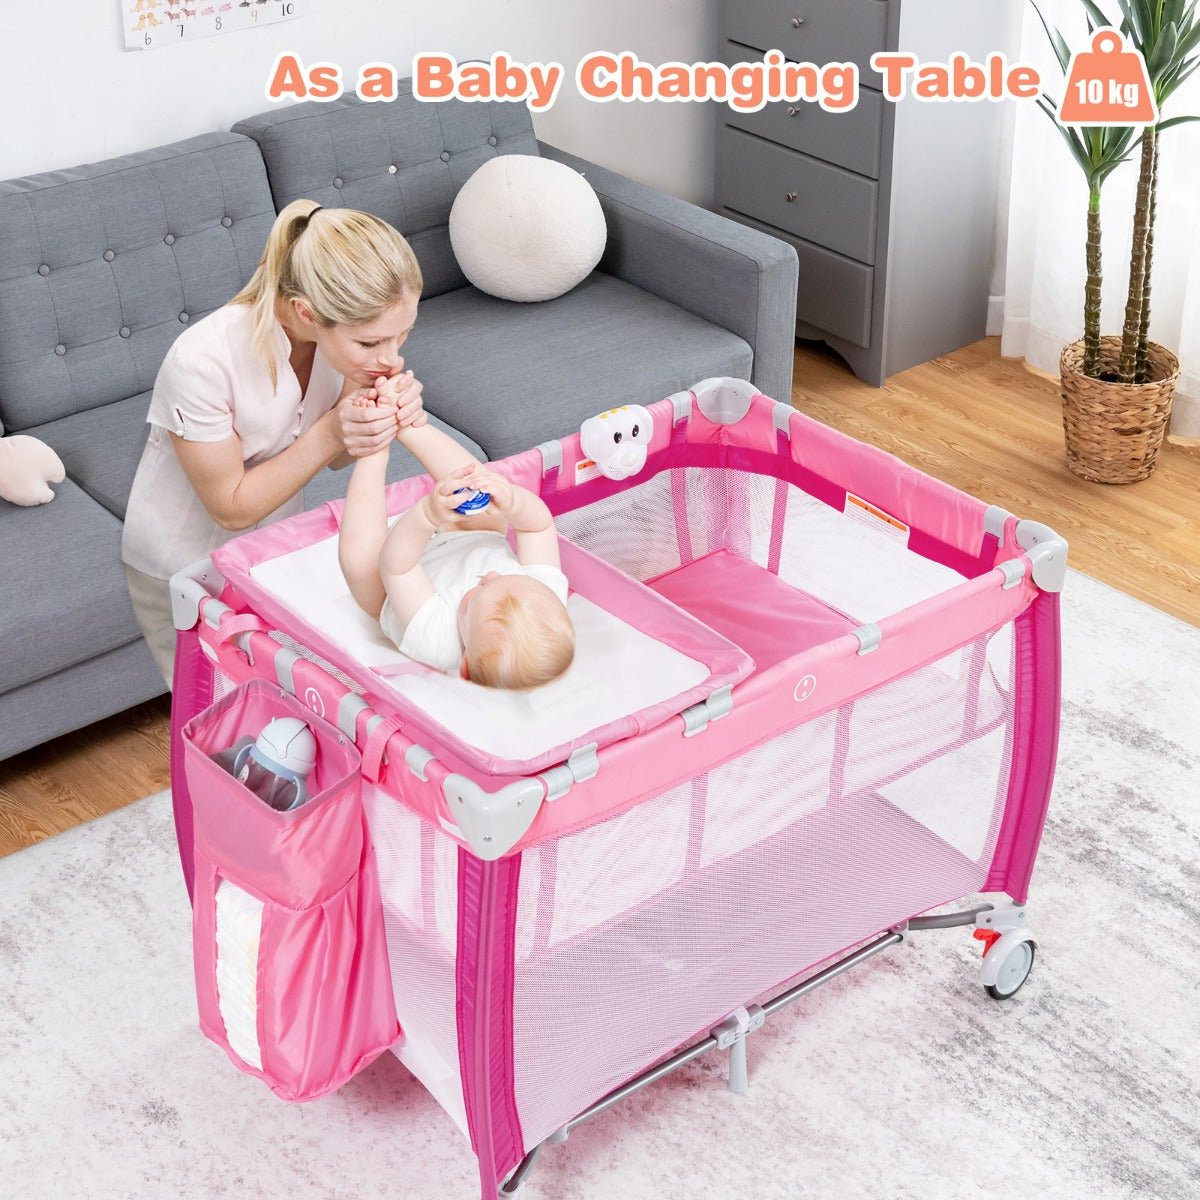 Detachable Net Baby Portacot - Caring Comfort and Versatile Adaptation